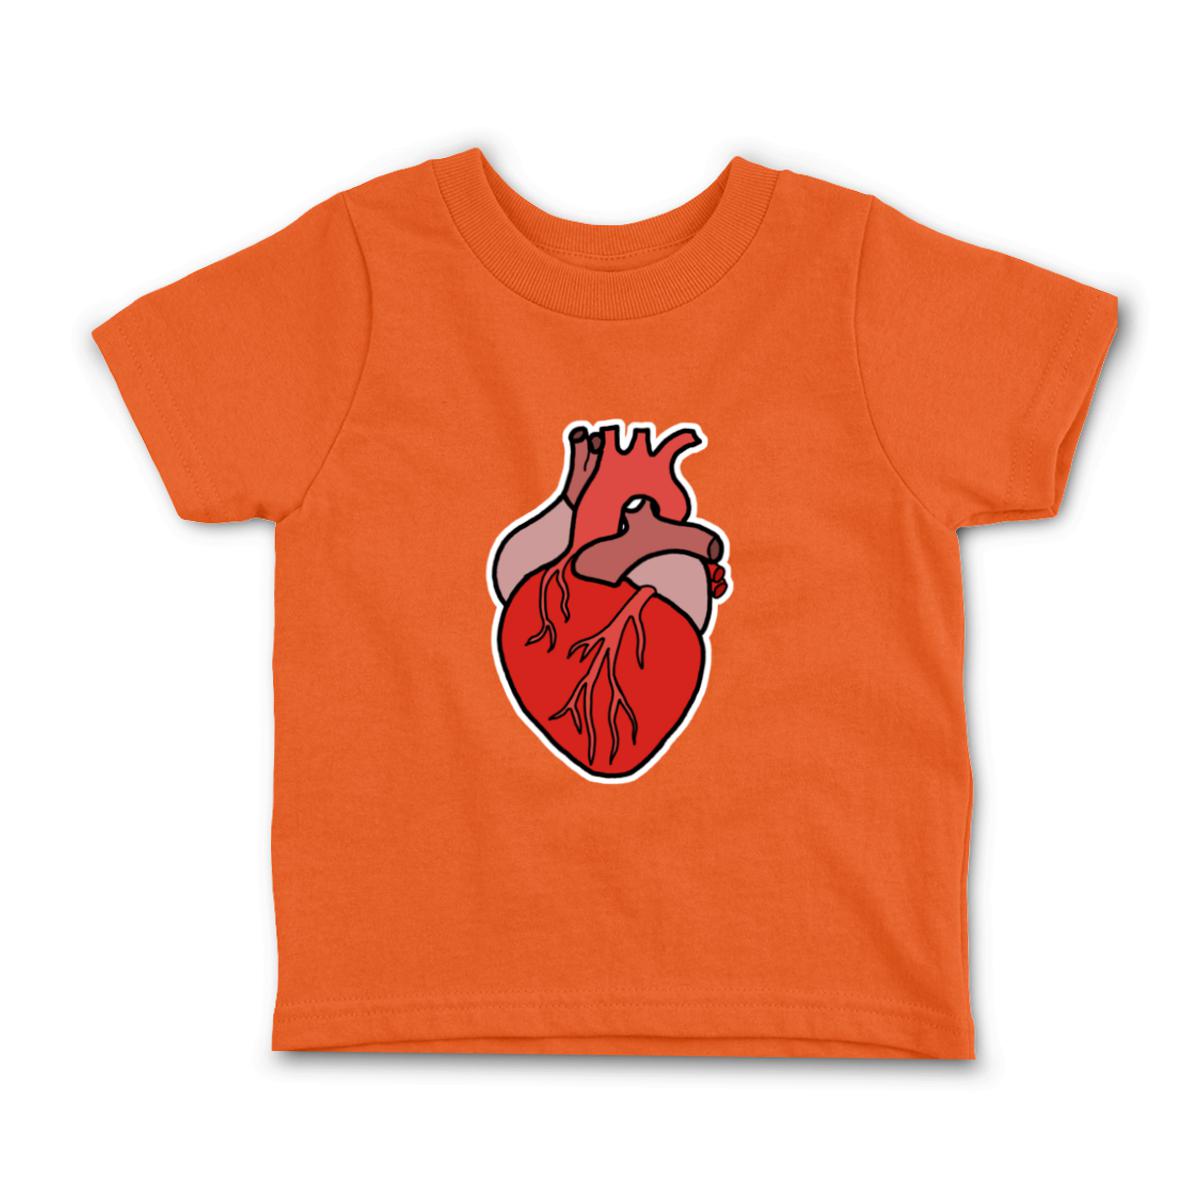 Illustrative Heart Infant Tee 24M orange